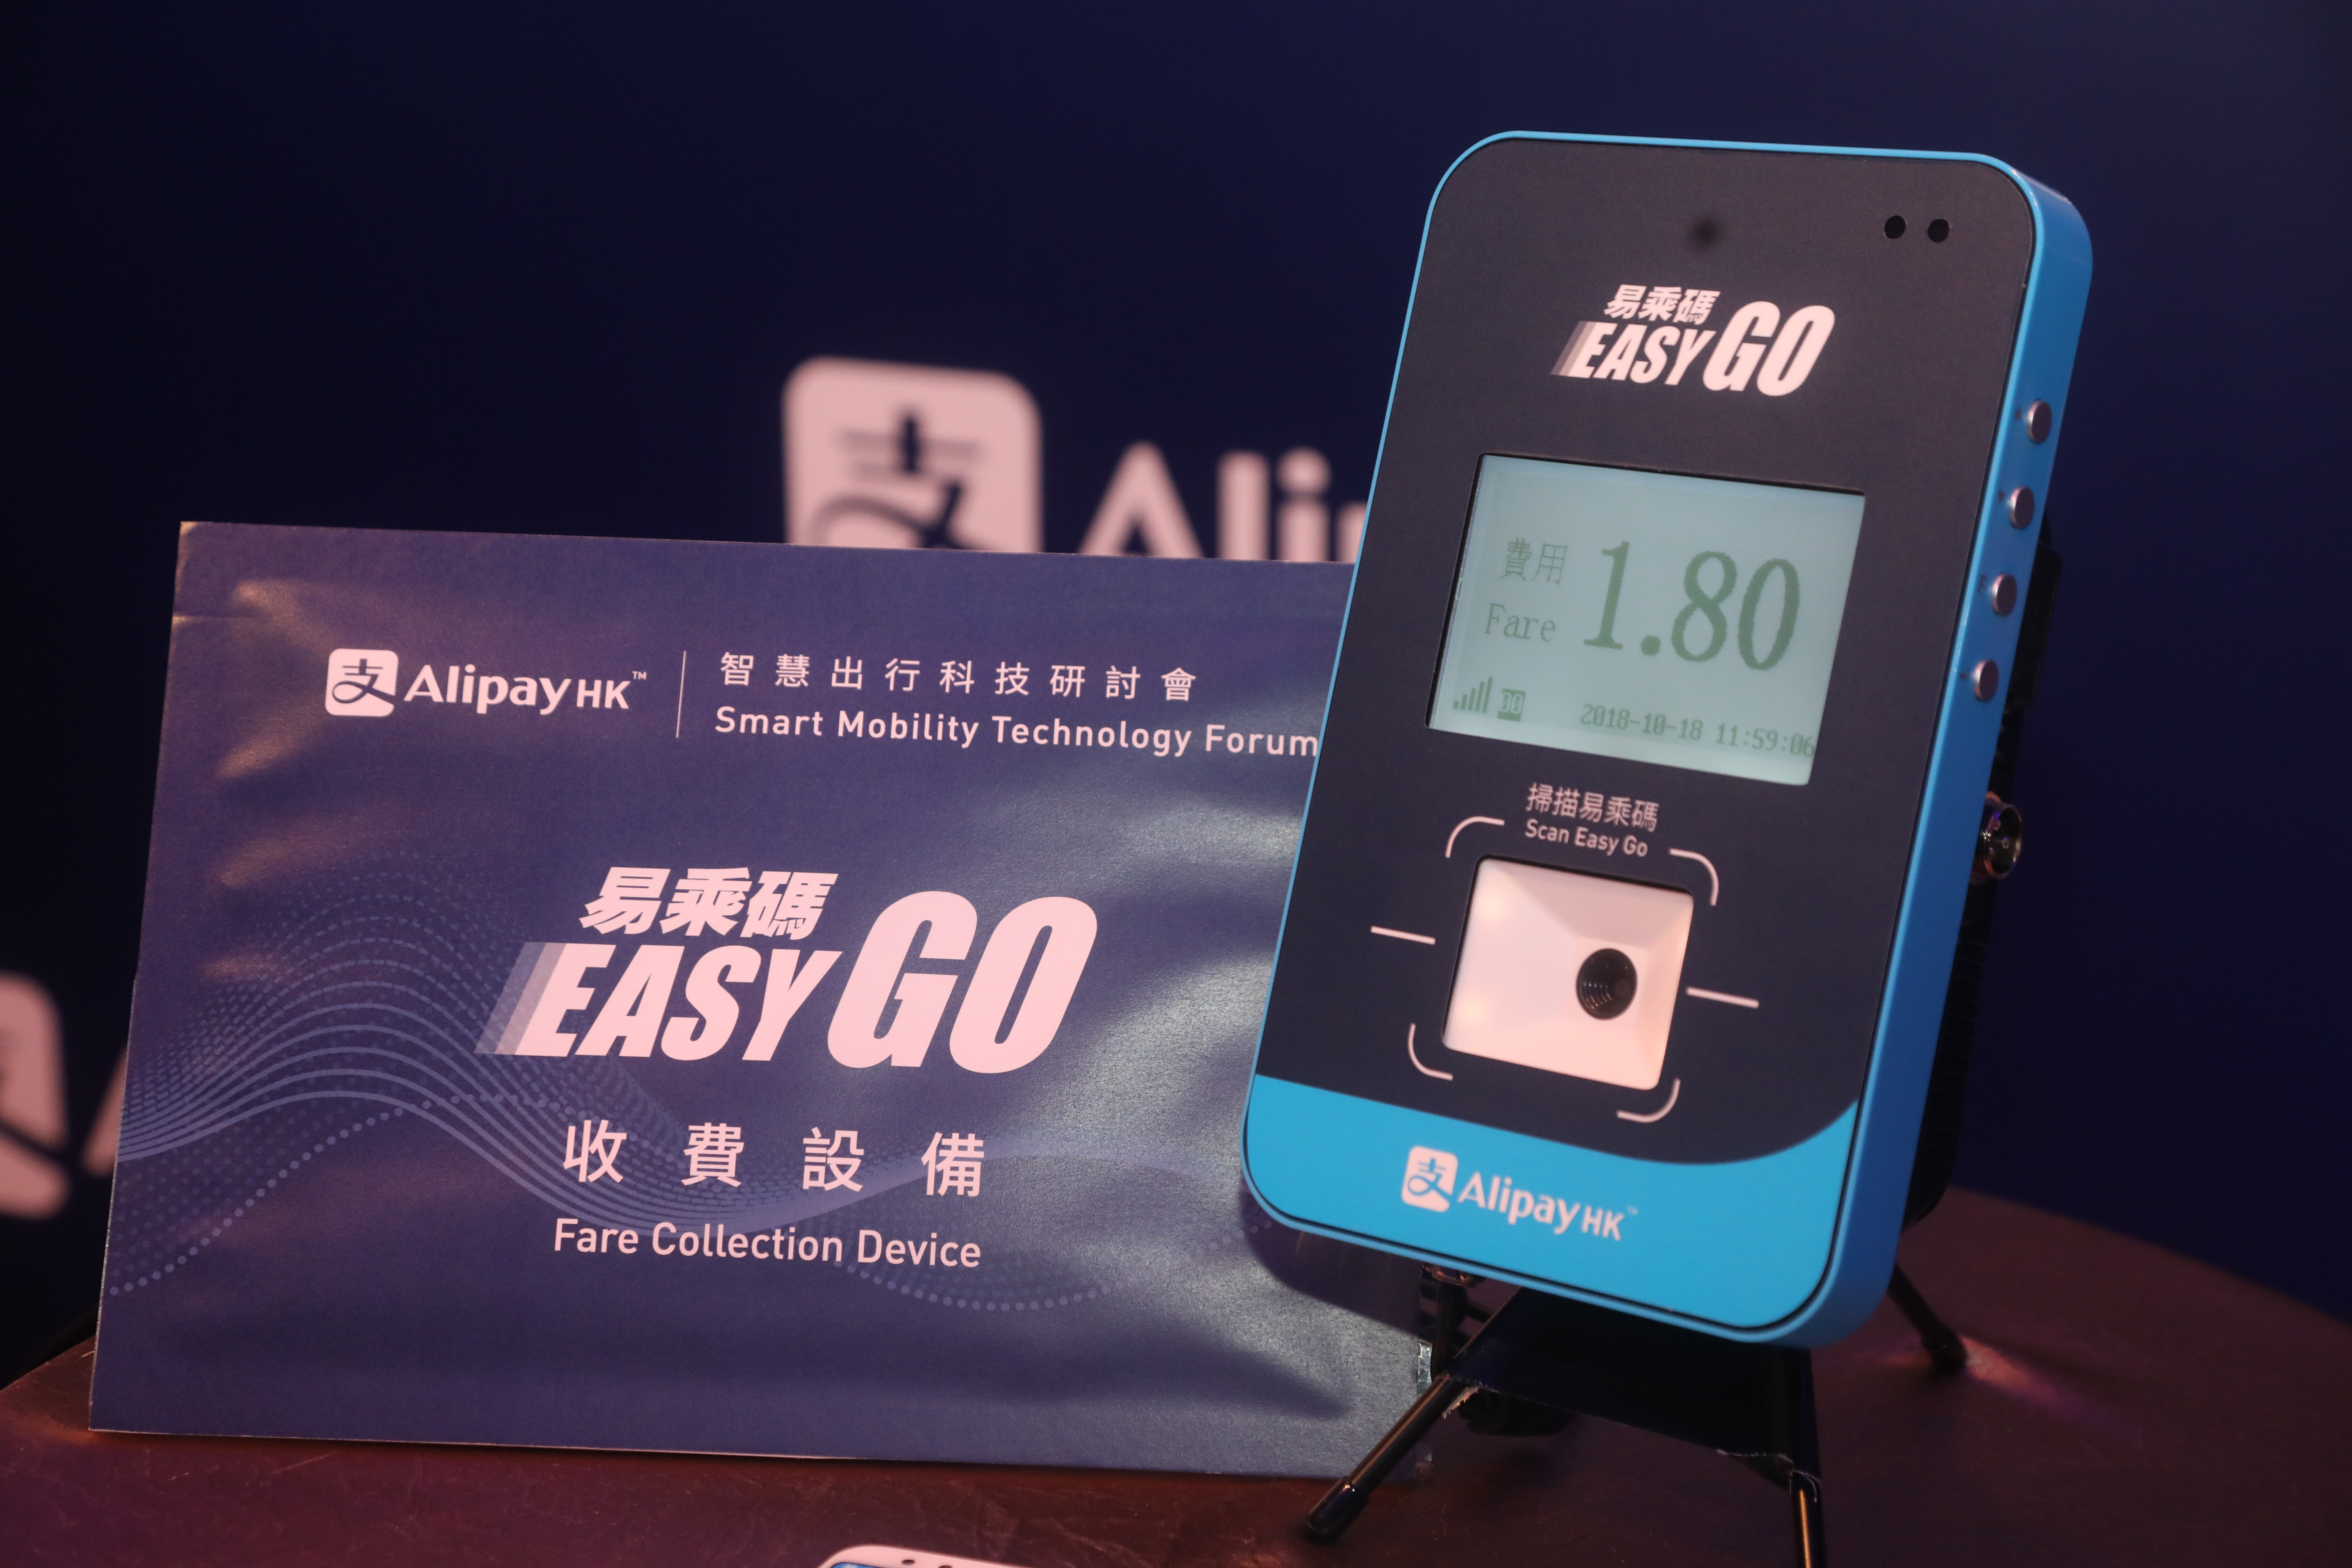 Alipay HK把其技術「易乘碼（EasyGo）」應用至九巴、新巴、城巴、龍運巴士、小輪及專線小巴，務求將「一碼通行」的概念延伸至更多交通應用場景。（何澤攝）